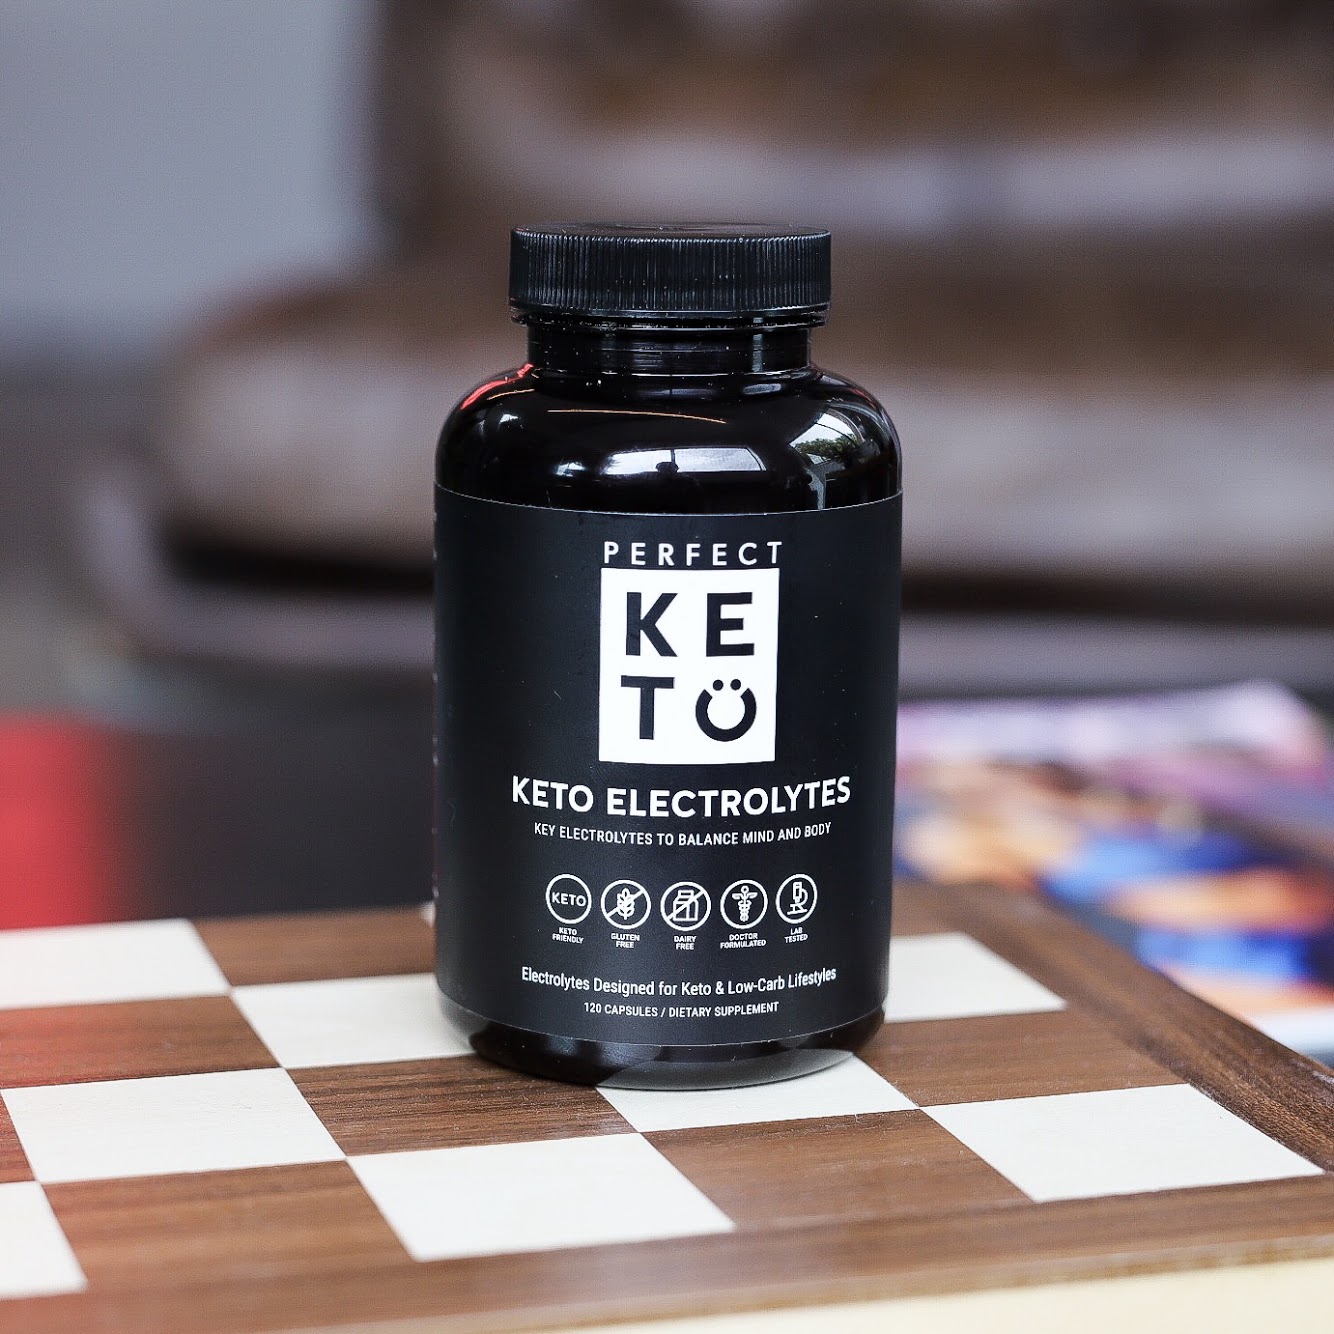 A jar of Perfect Keto Electrolytes